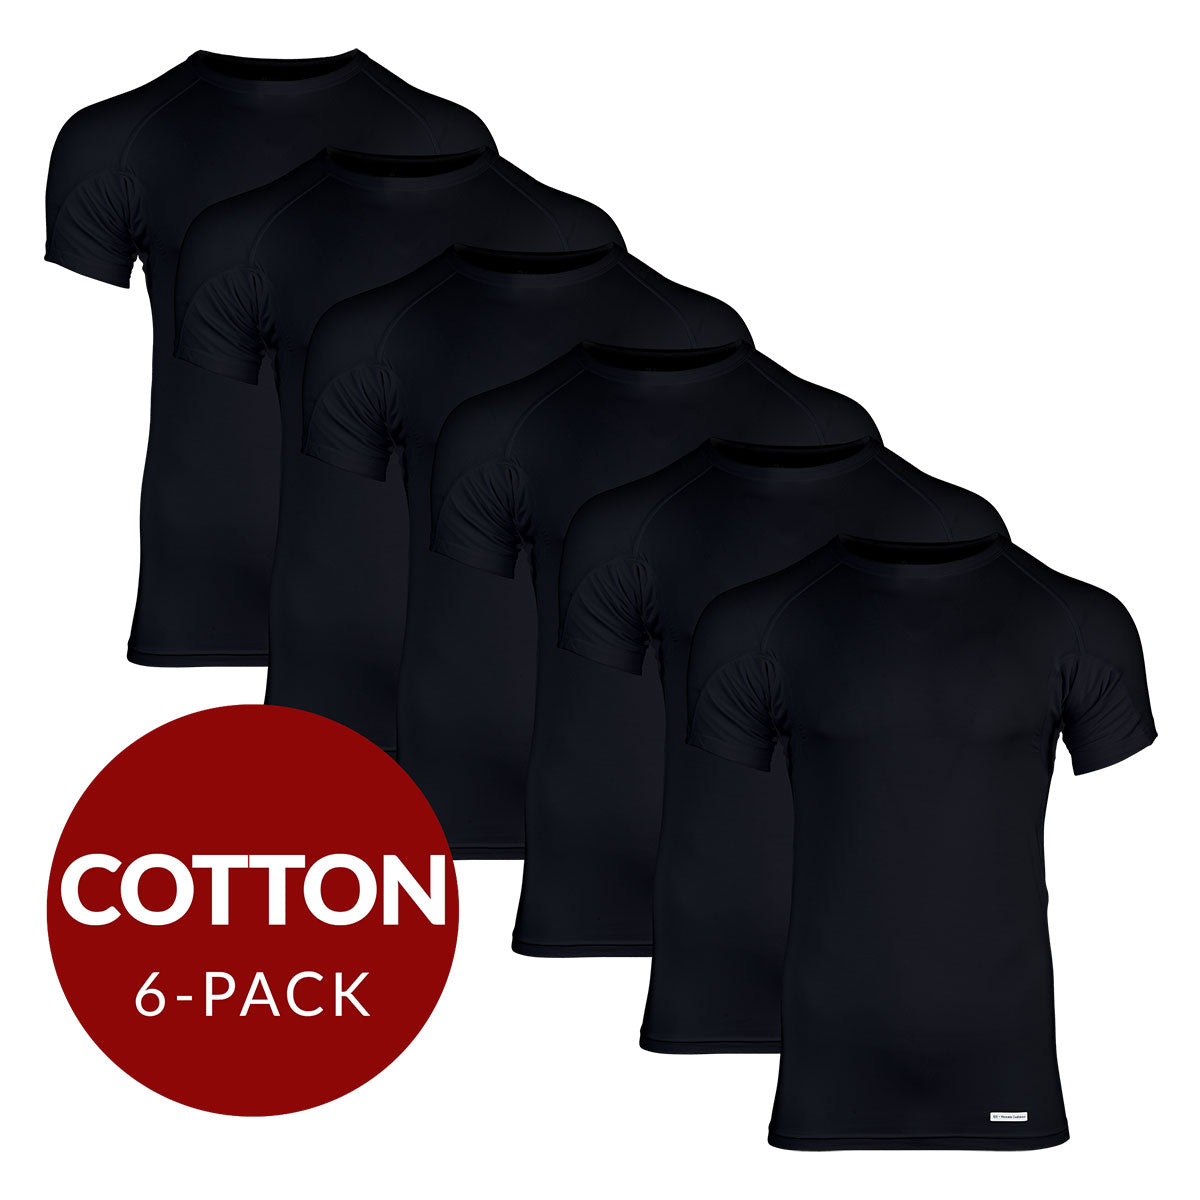 Crew Neck Cotton Sweat Proof Undershirt For Men - Black 6-Pack - Ejis